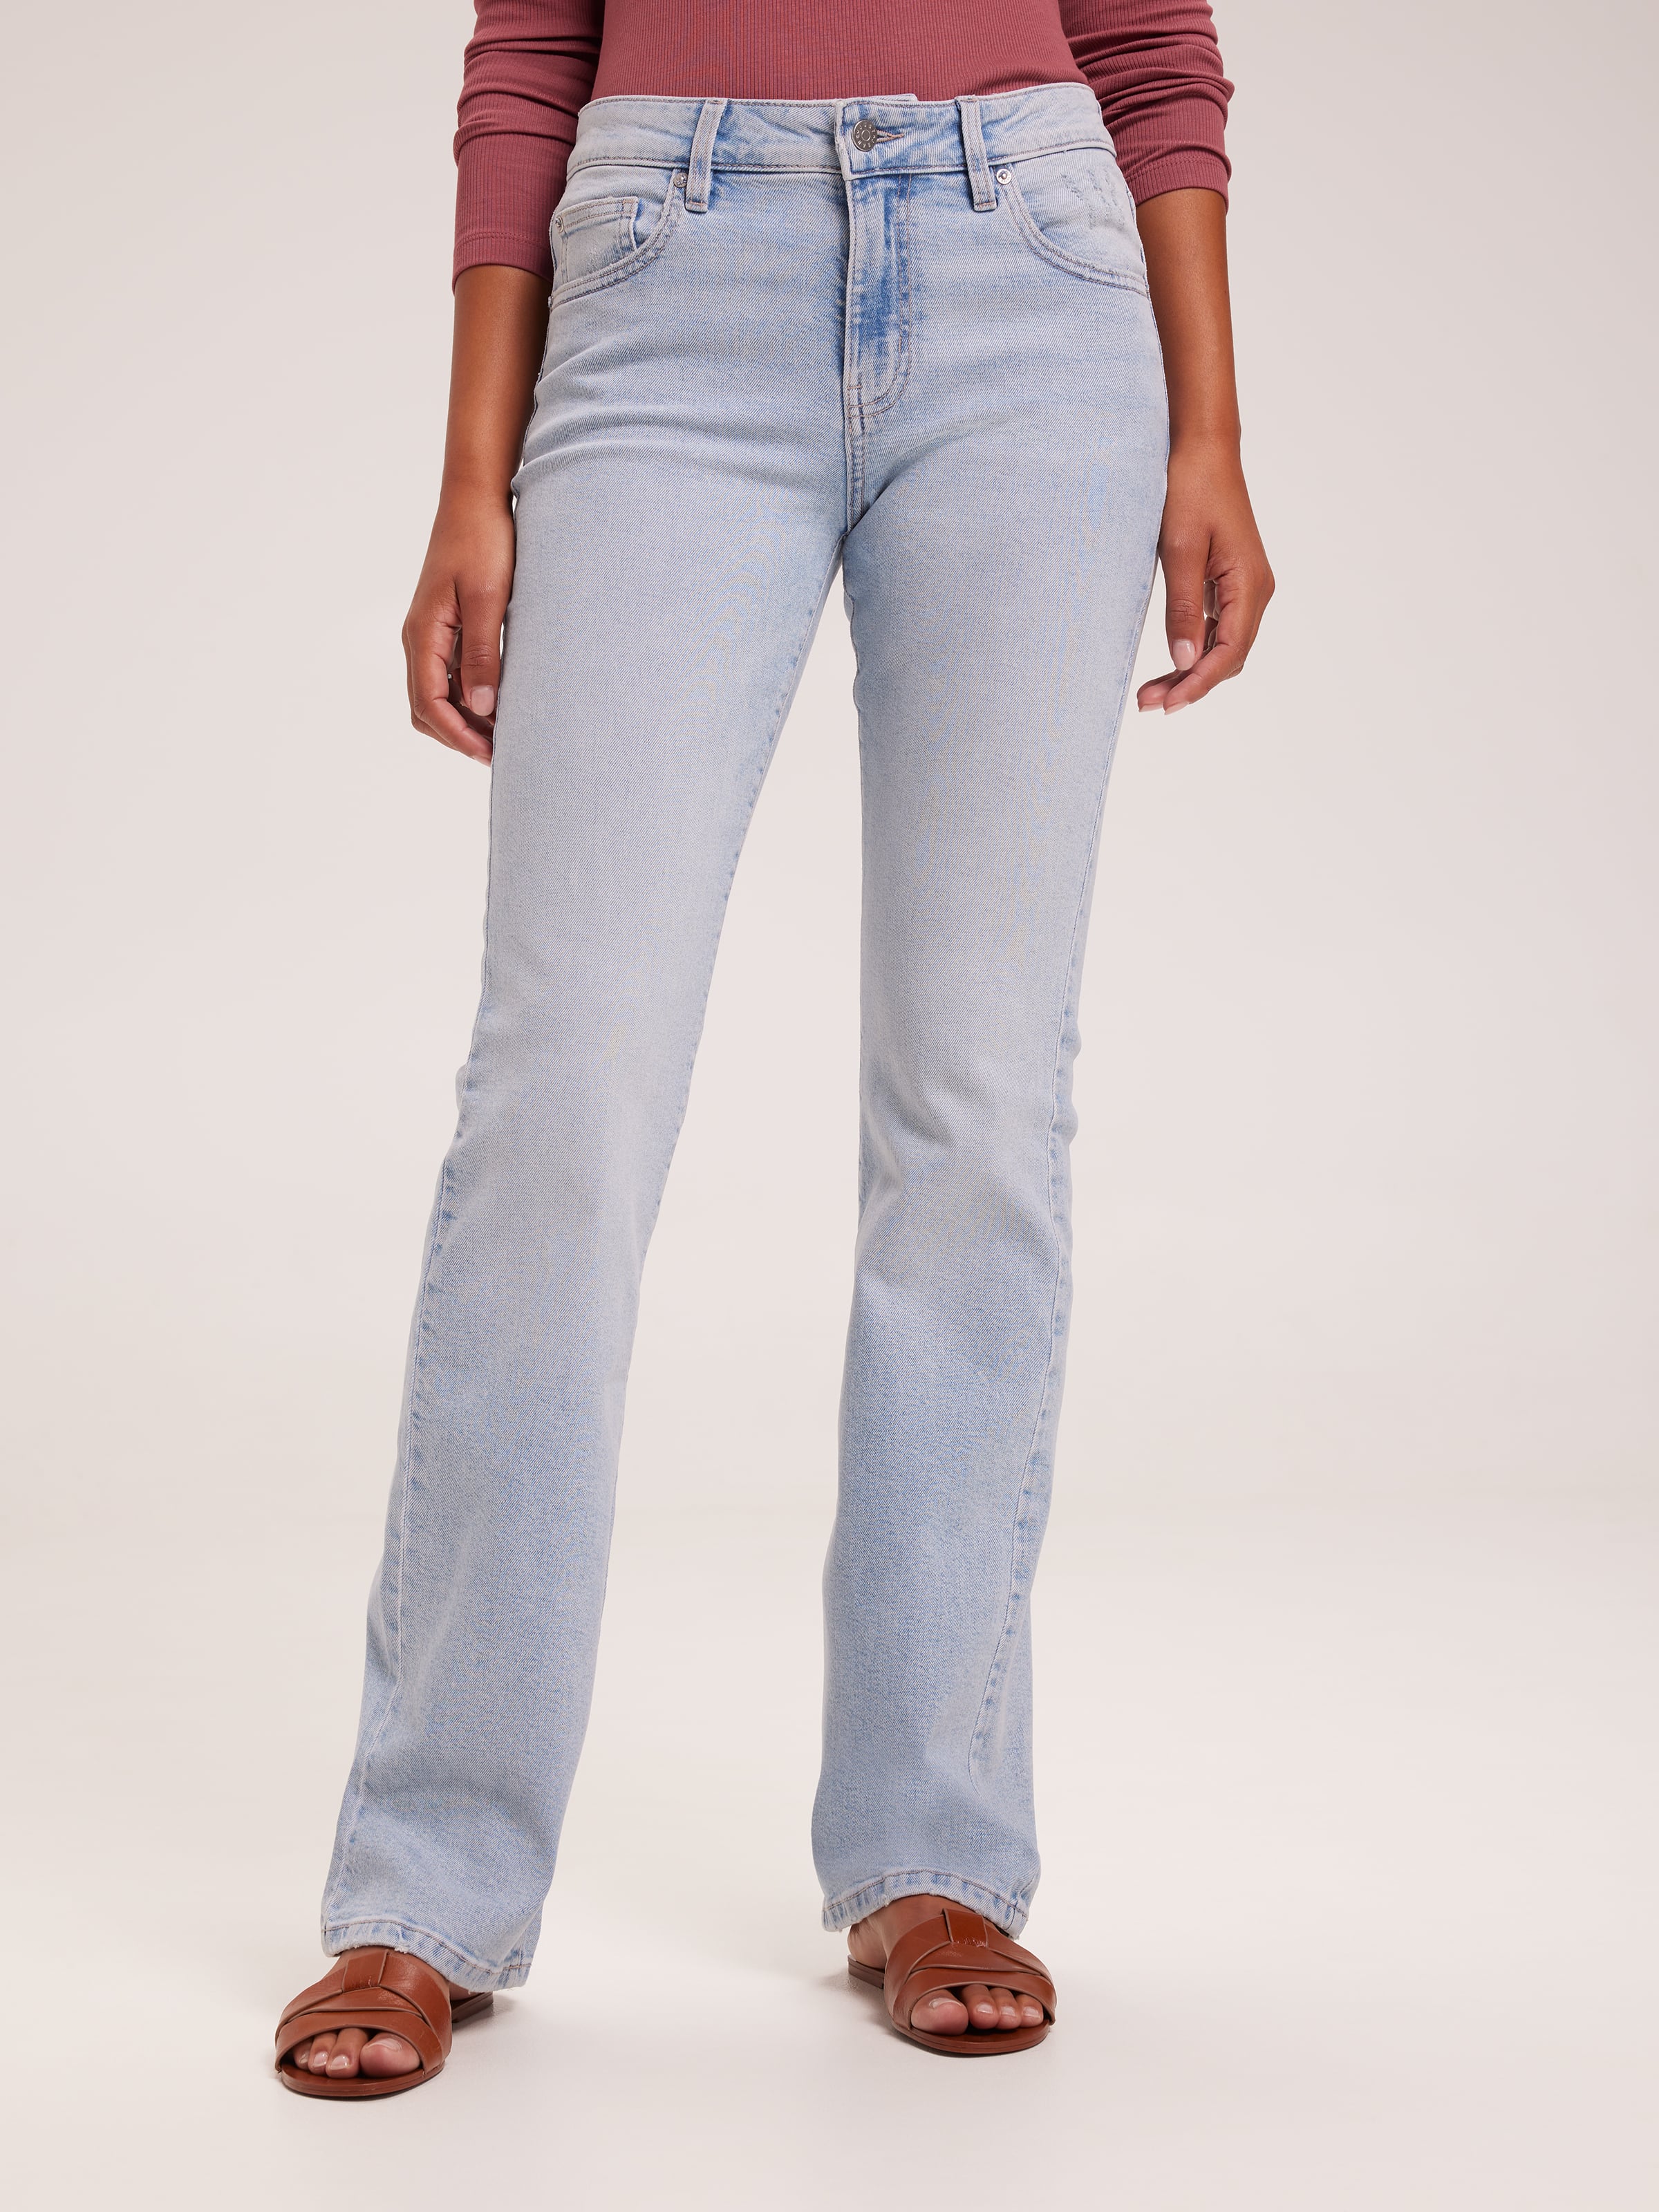 Size 14 Long Pants for Women Women's Jeans Micro Flare Pants Middle Waist  Jeans, Light Blue, Large : : Clothing, Shoes & Accessories